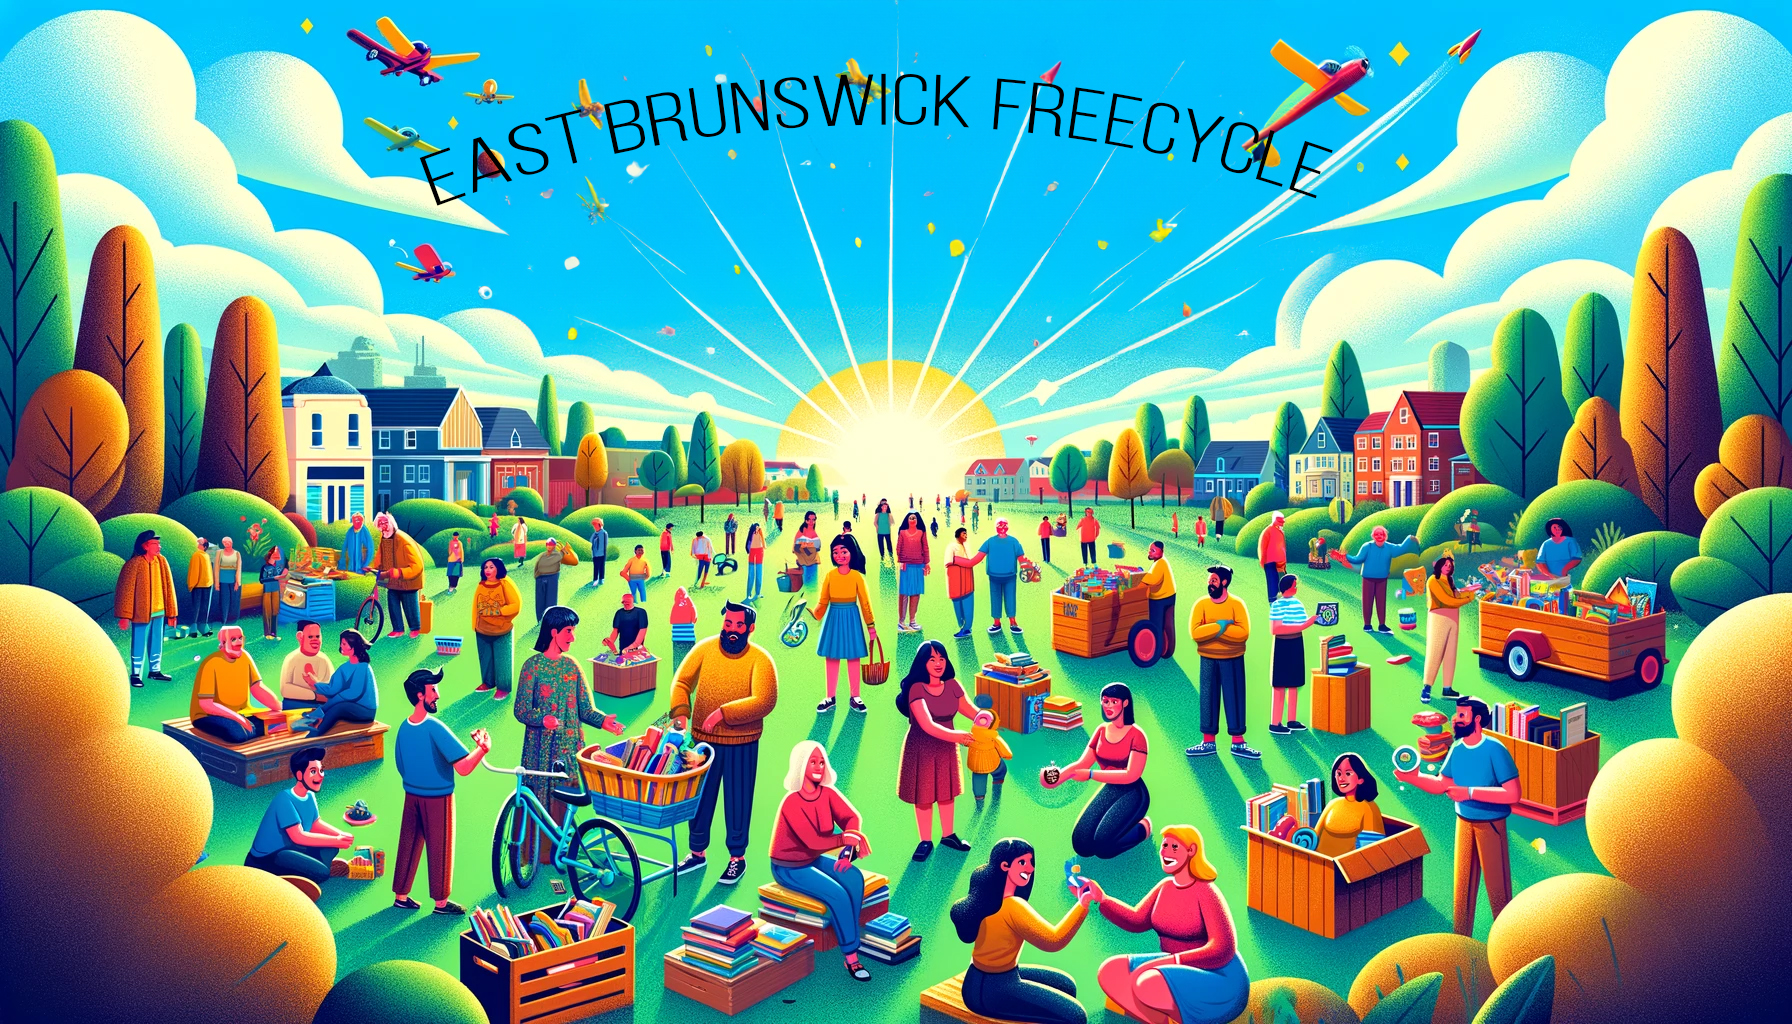 east brunswick freecycle